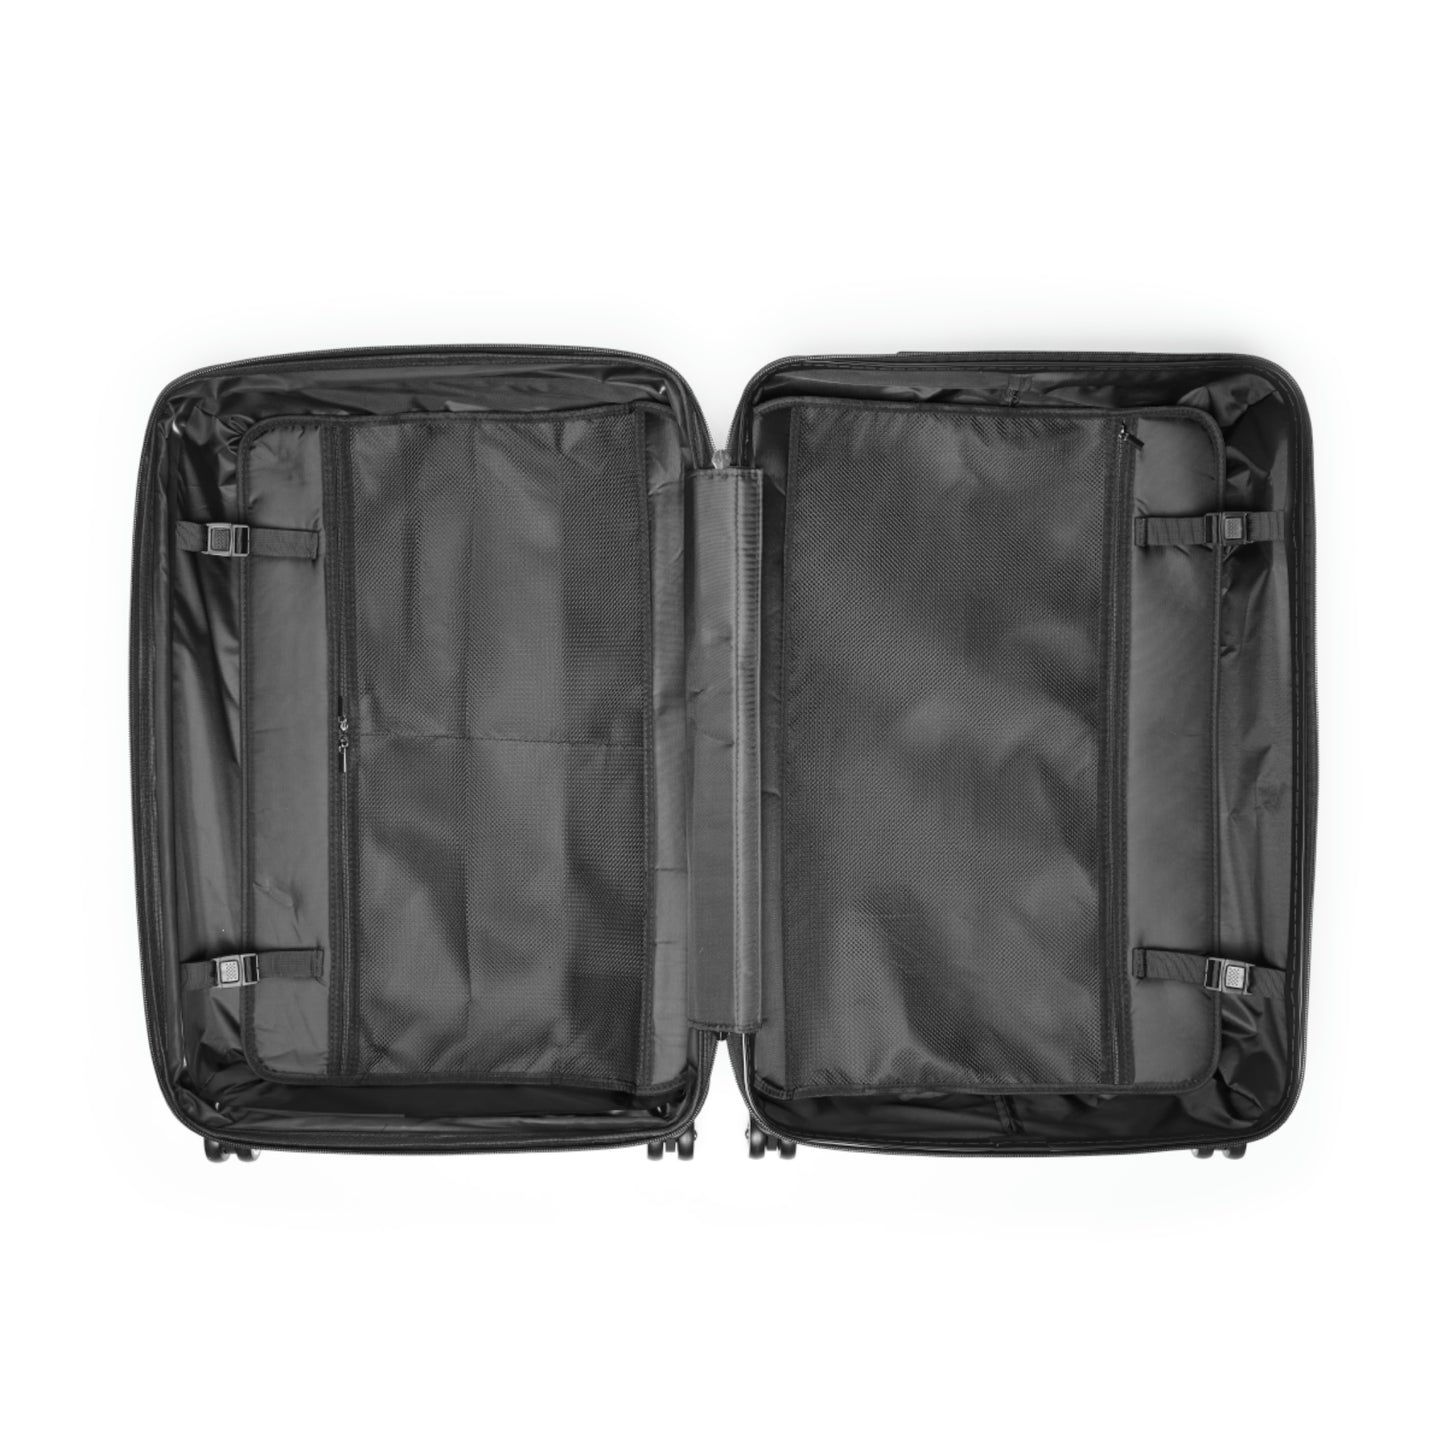 Geotrott Philadelphia Eagles2 National Football League NFL Team Logo Cabin Suitcase Rolling Luggage Checking Bag